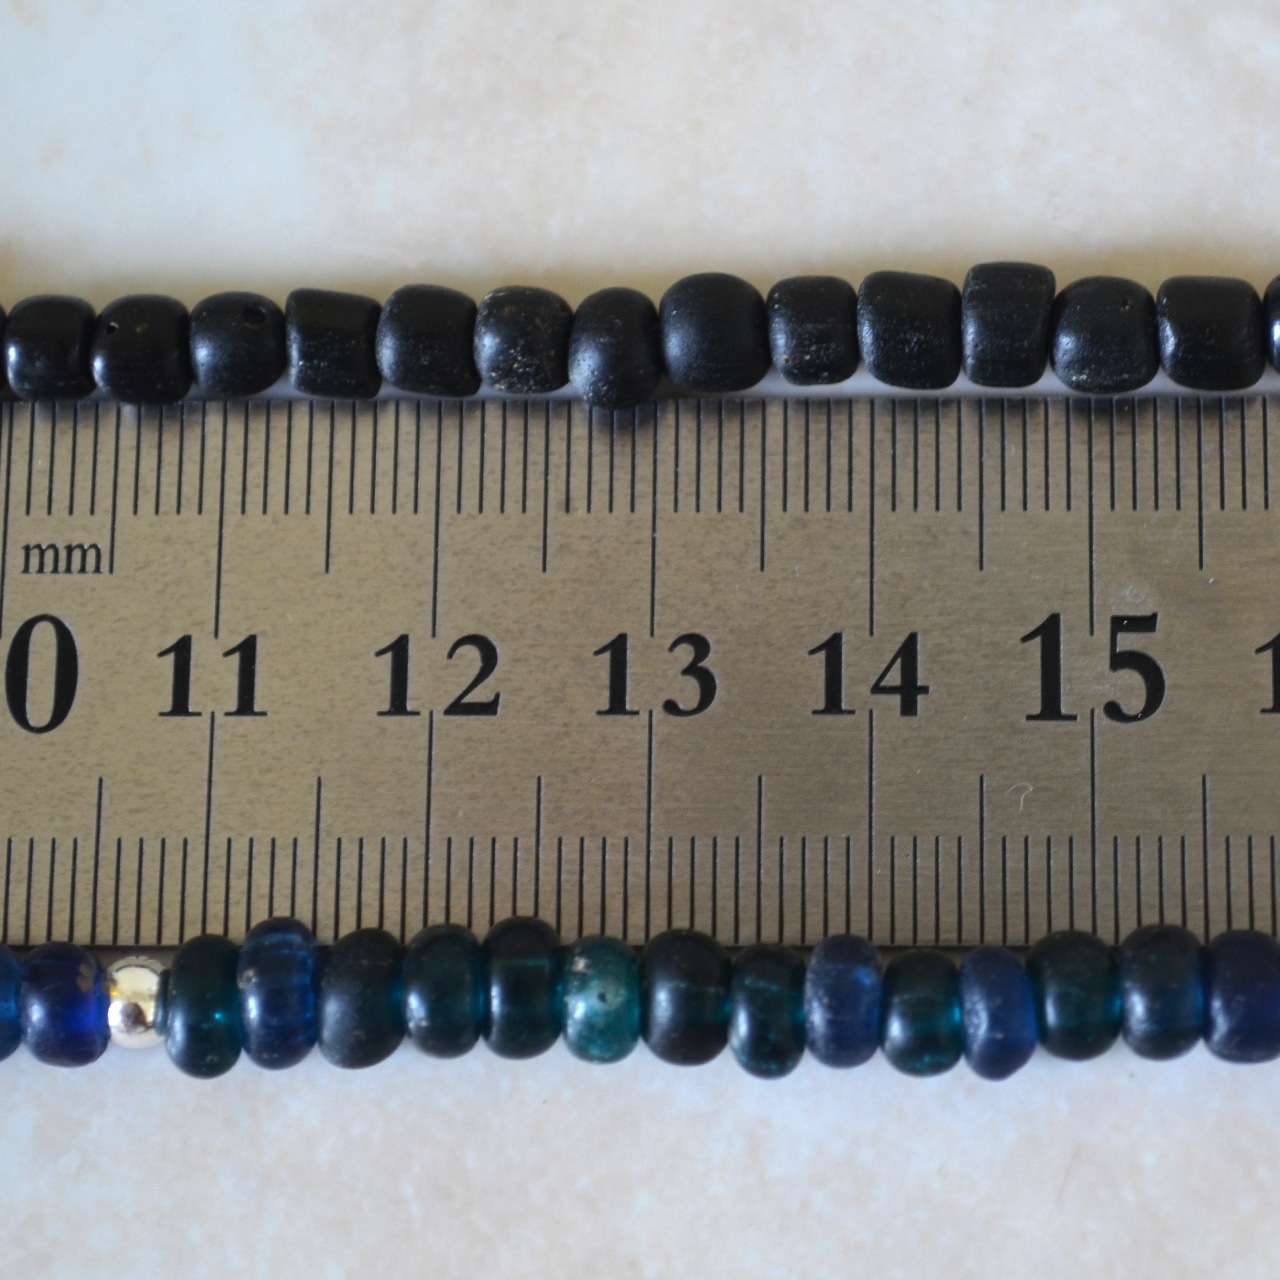 Mandi/マンディ Antique Beads Necklace(50cm)(Navy/Black)